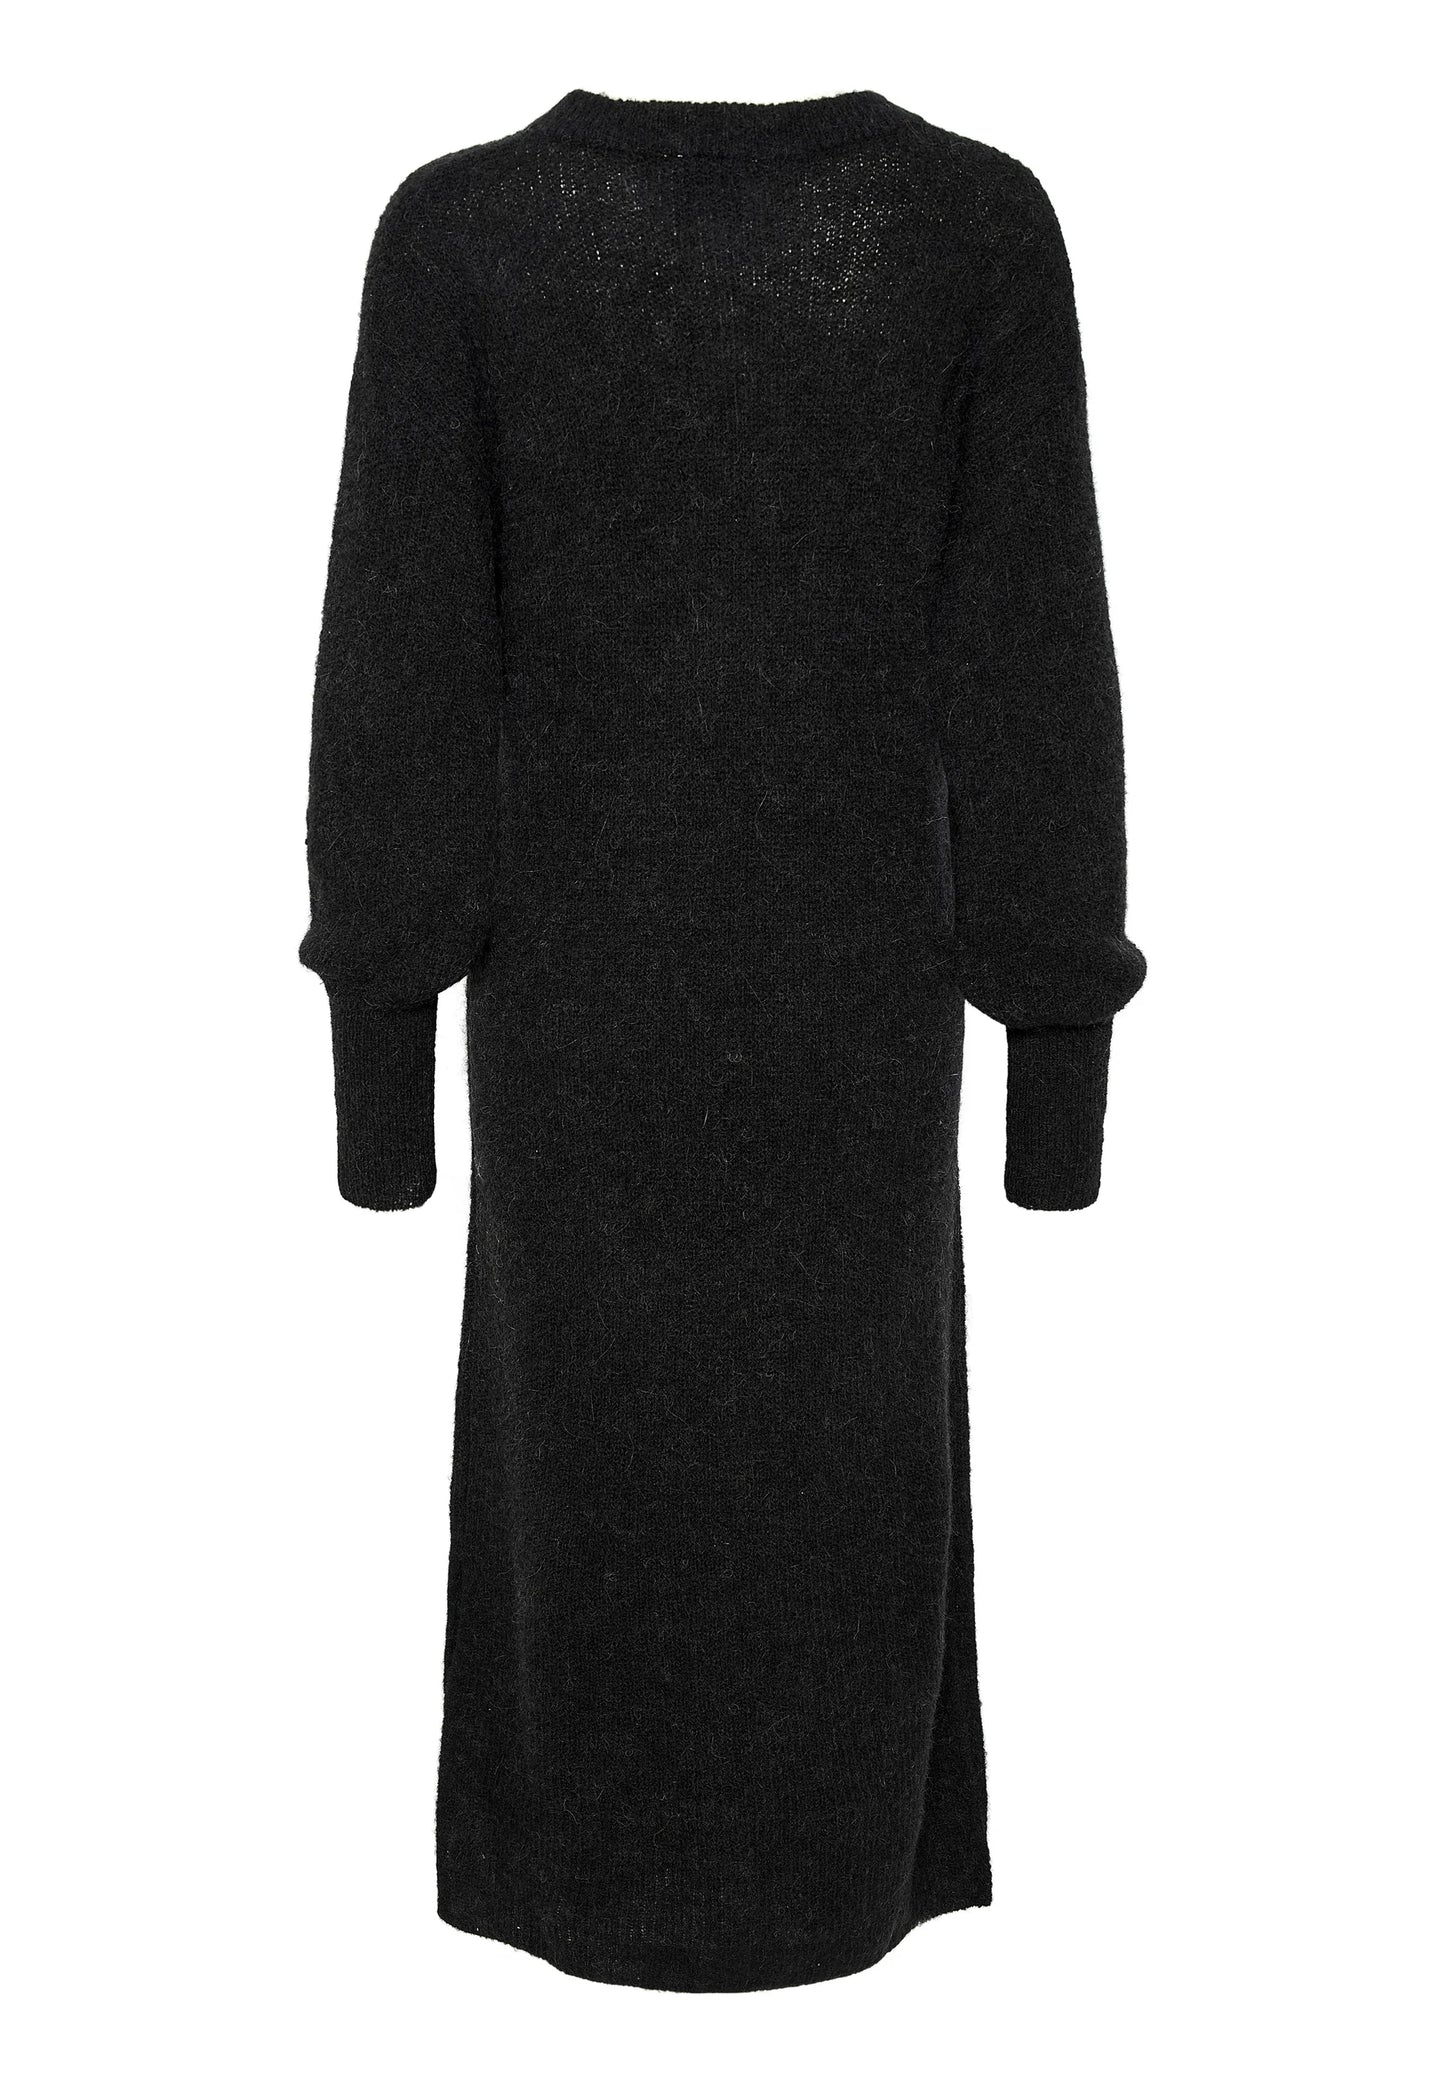 My Essential Wardrobe Julie Knit Dress Black